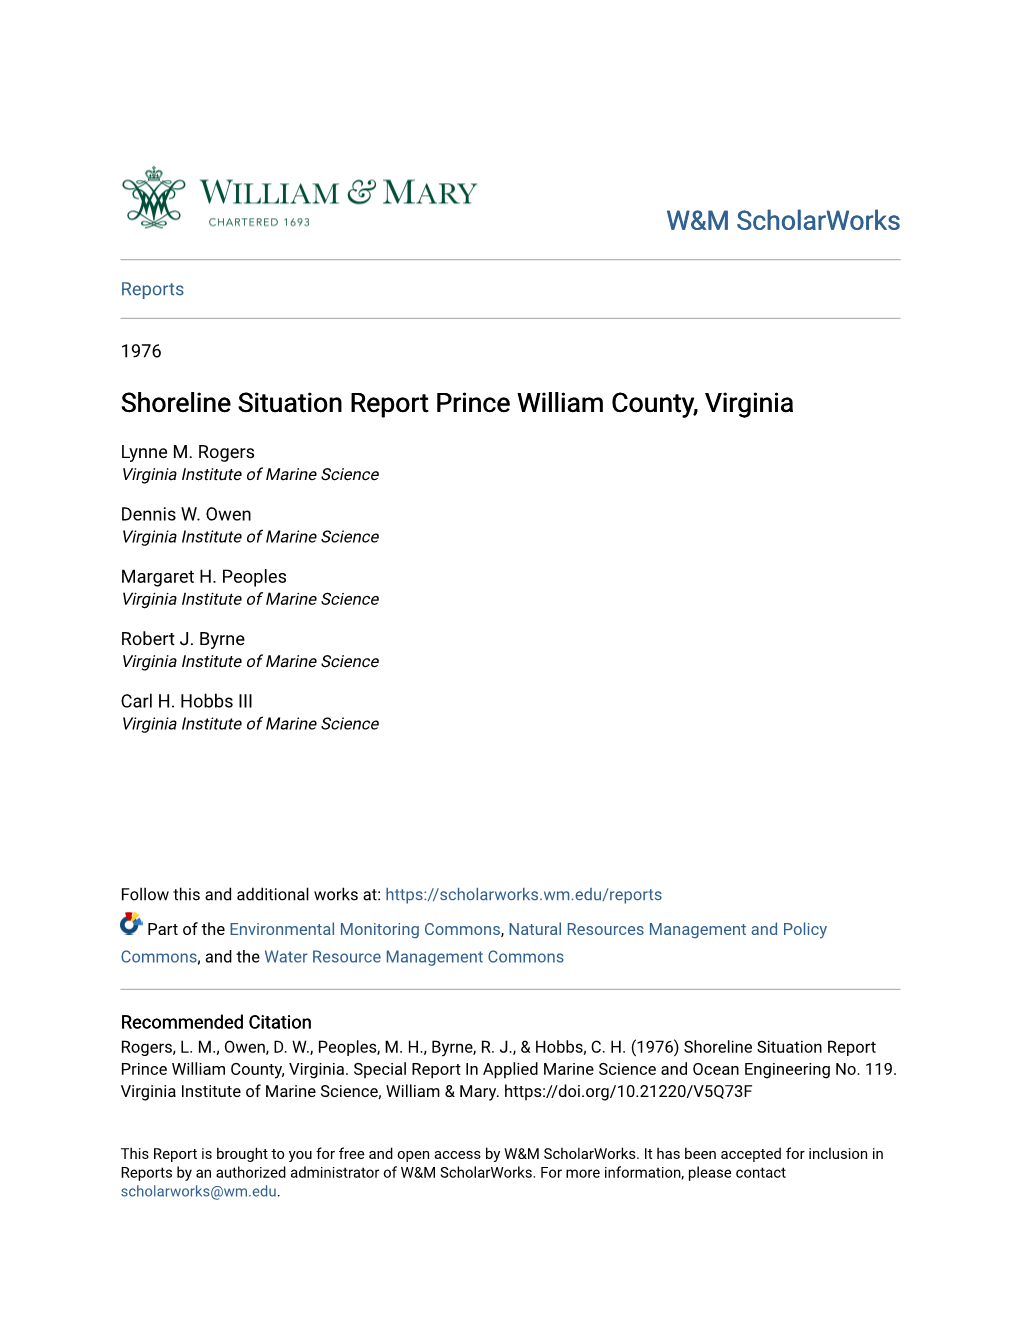 Shoreline Situation Report Prince William County, Virginia